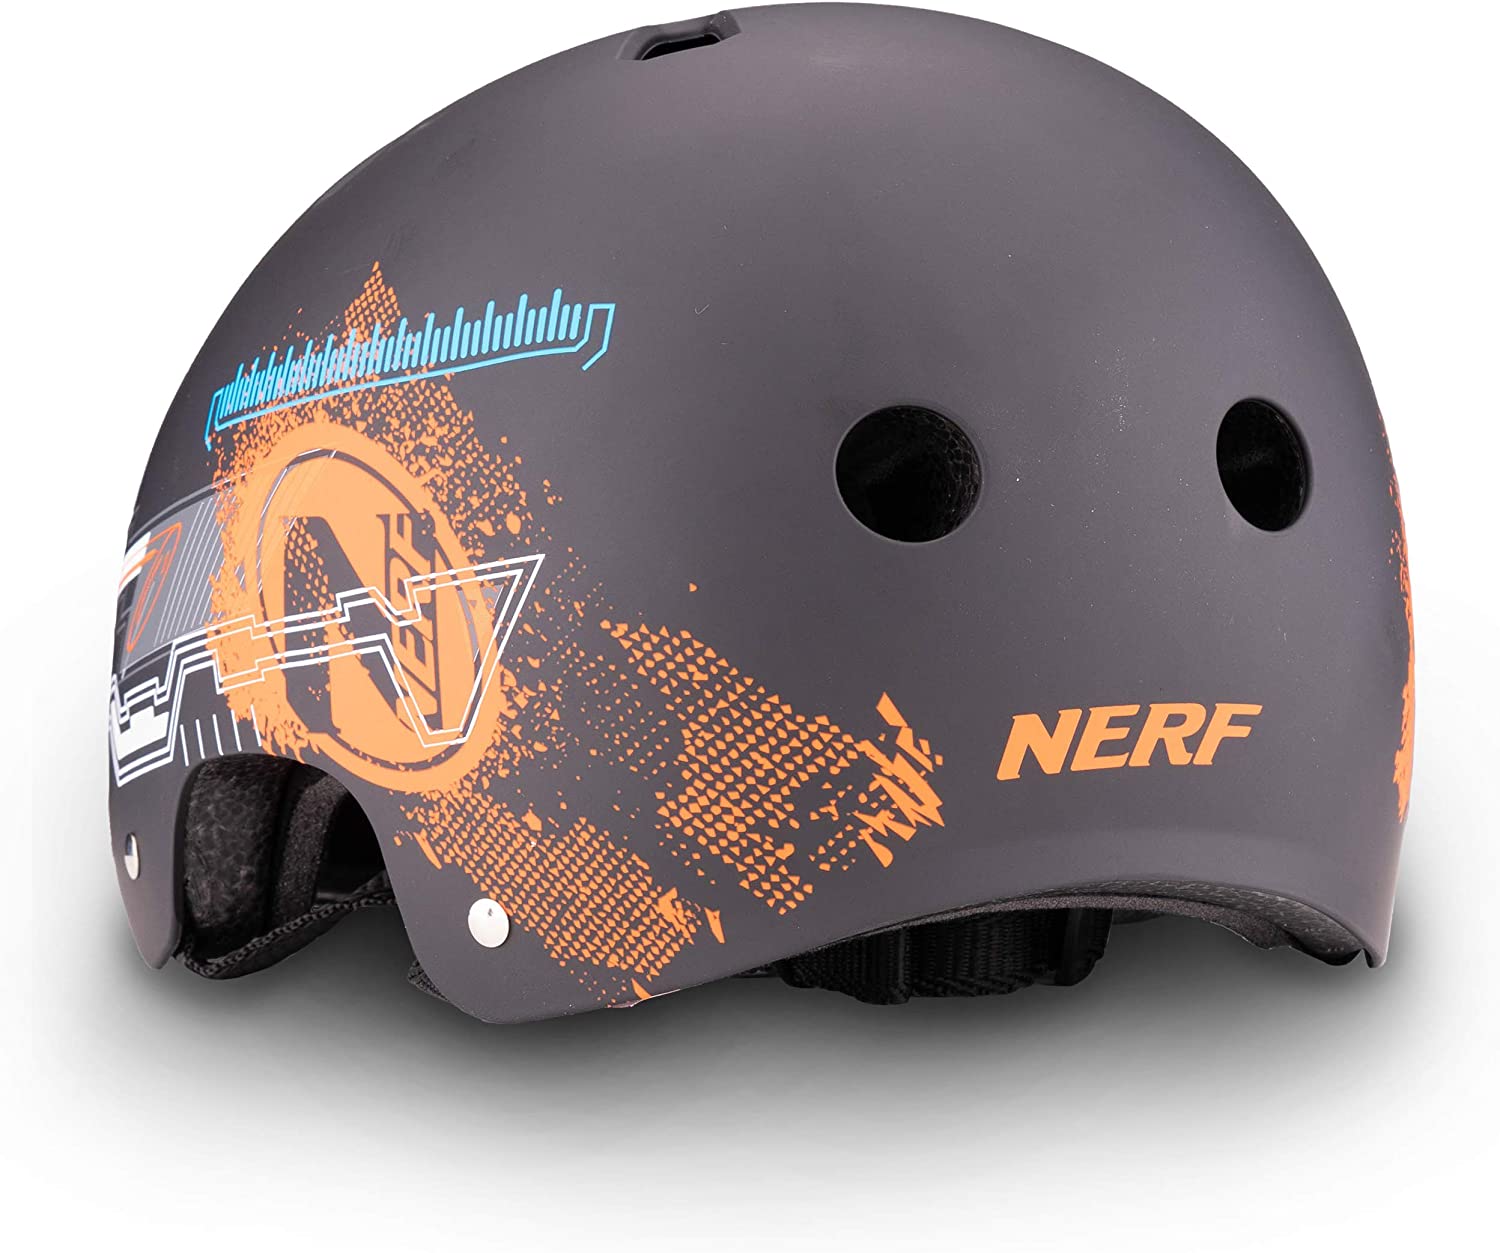 Nerf Noggin Protection - Nerf Helmet, NerfGunAttachments